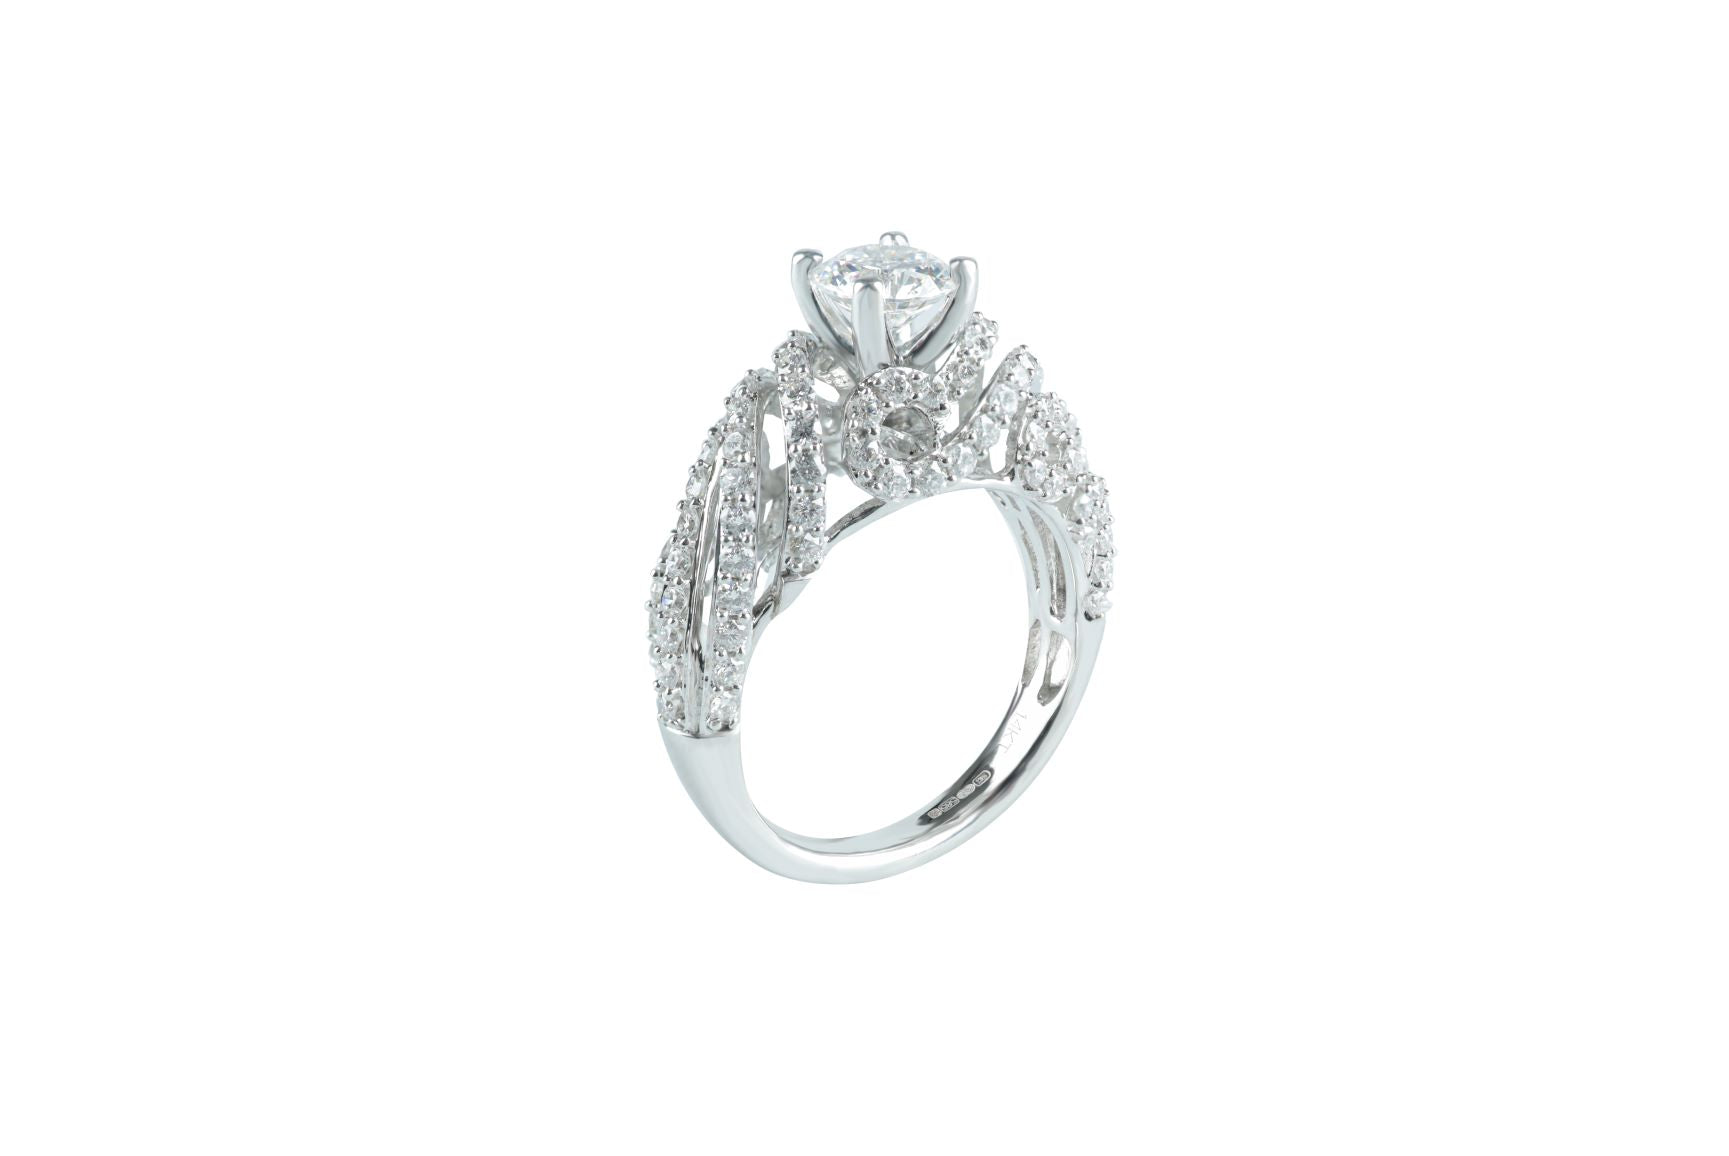 LeVian Bridal Collection Diamond Engagement Ring 1.85 ctw